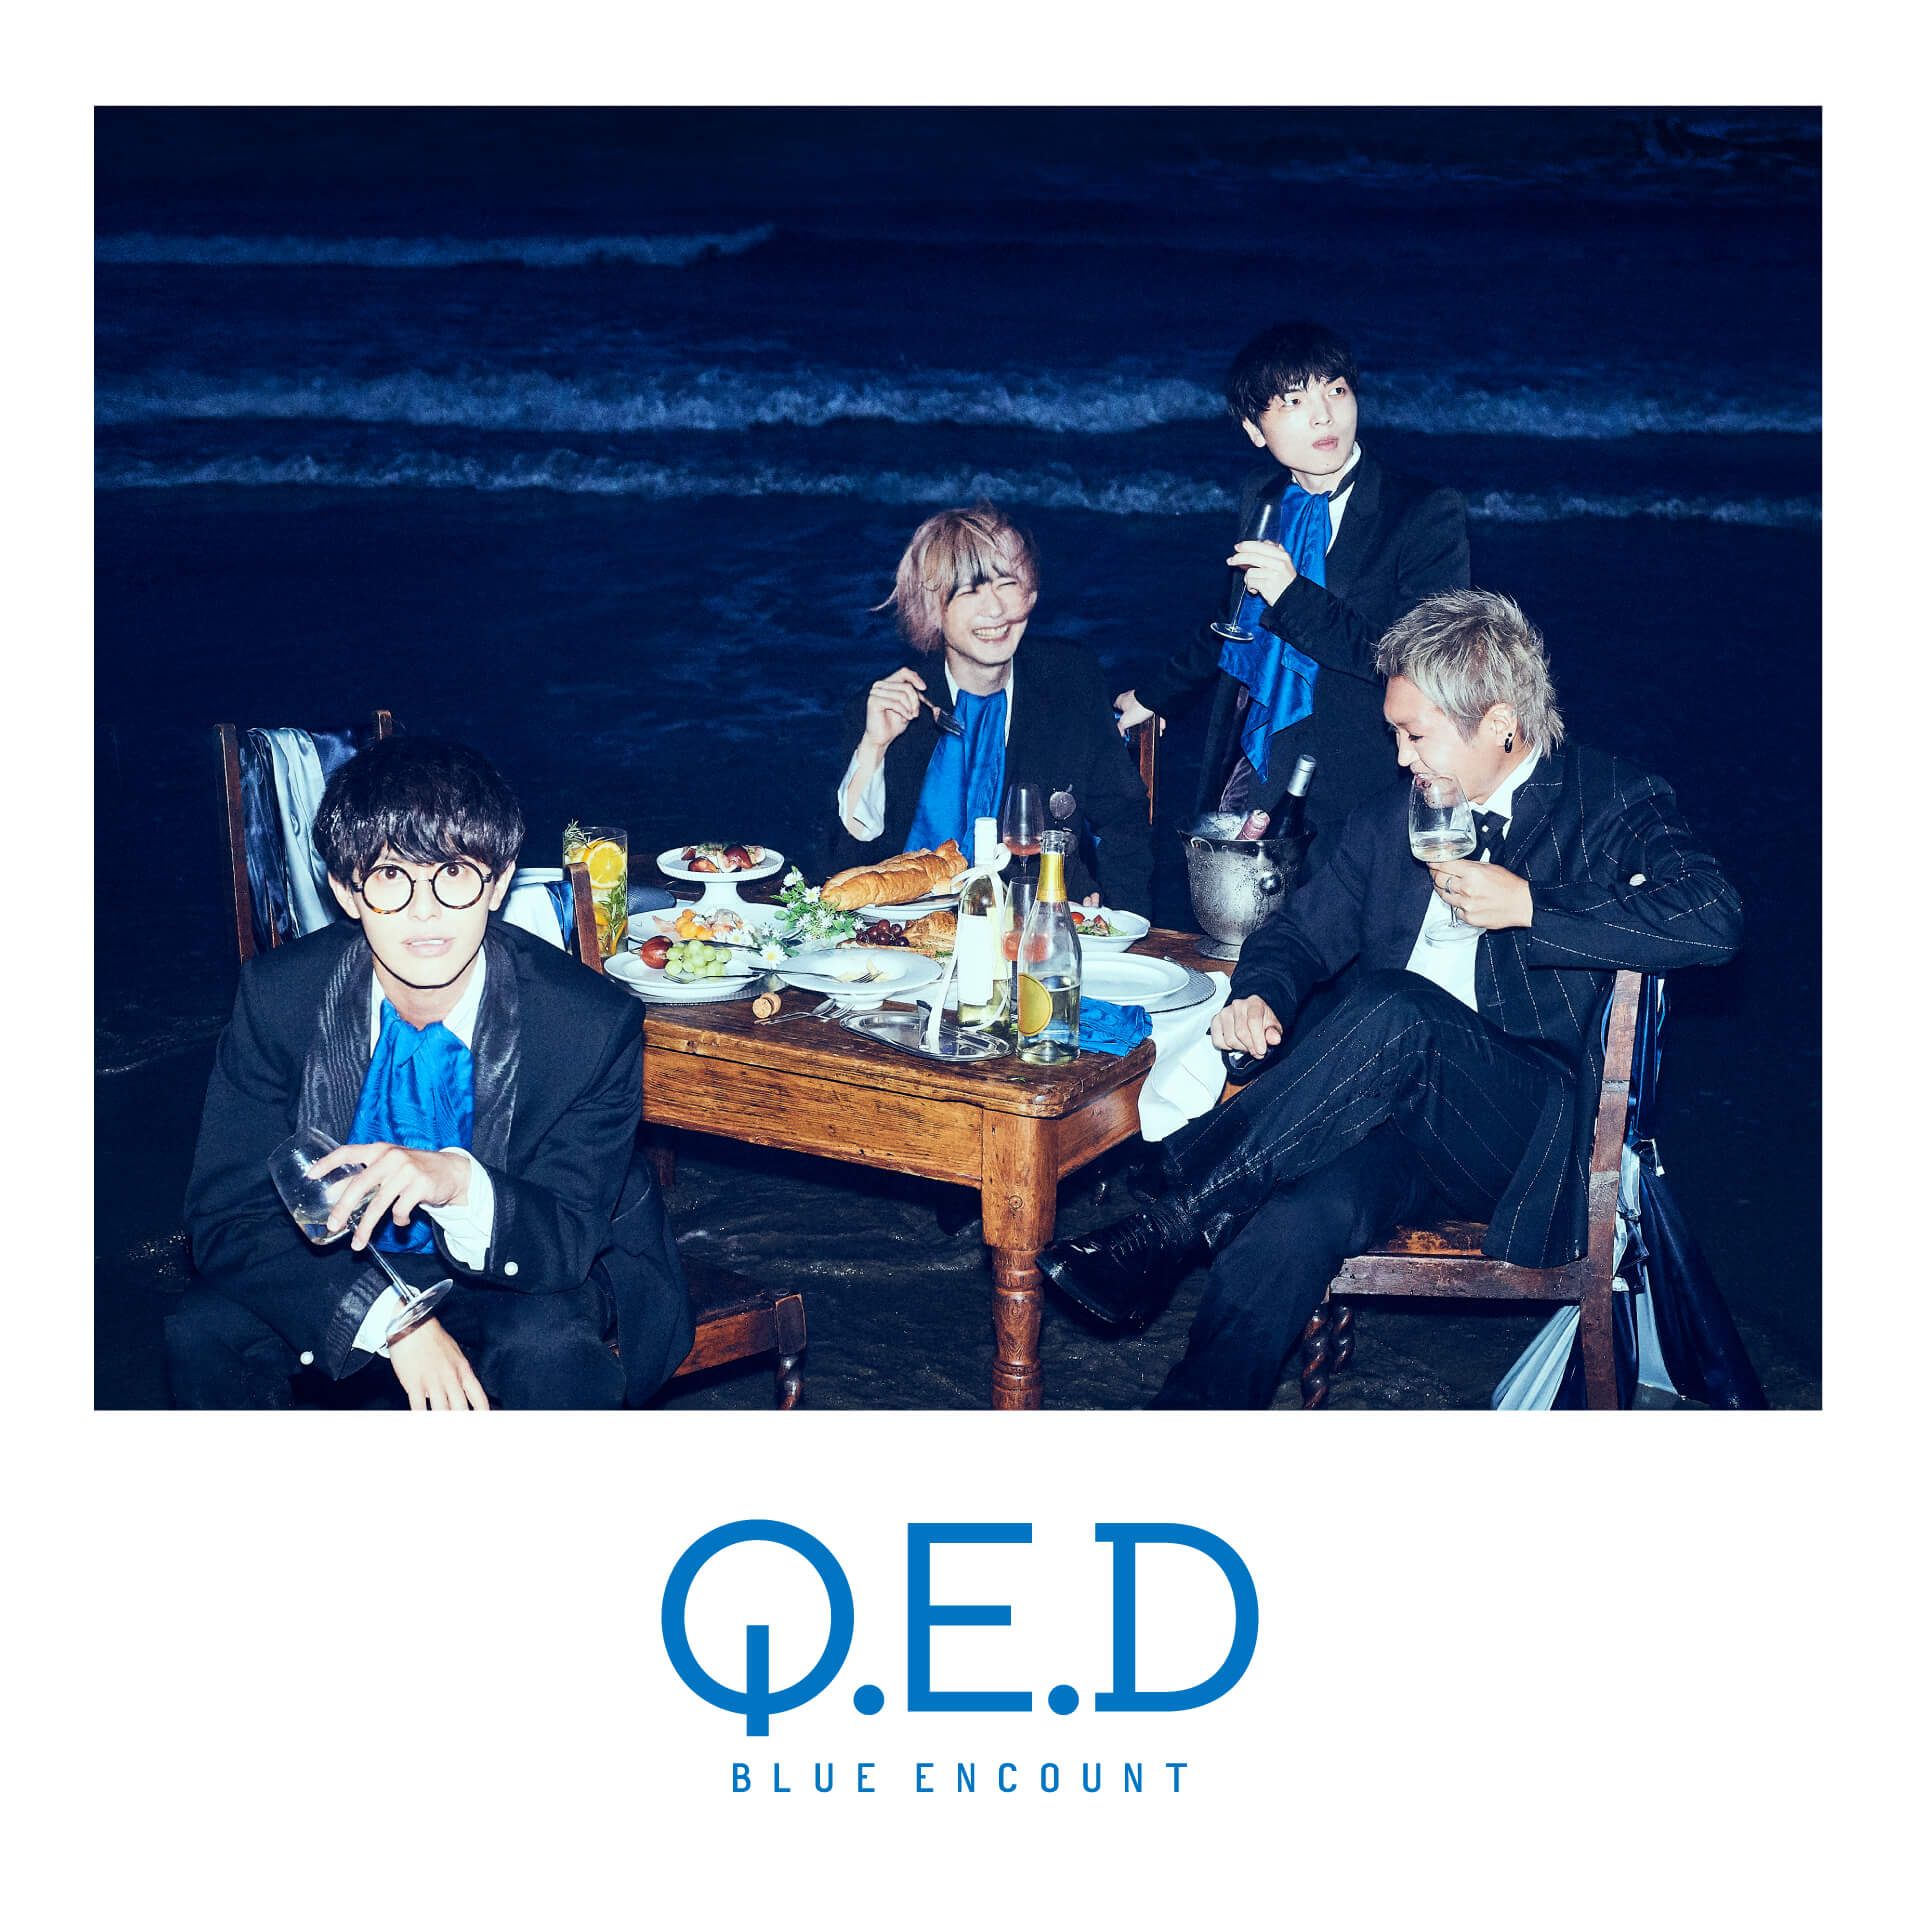 BLUE ENCOUNT 「Q.E.D」 CD Jacket